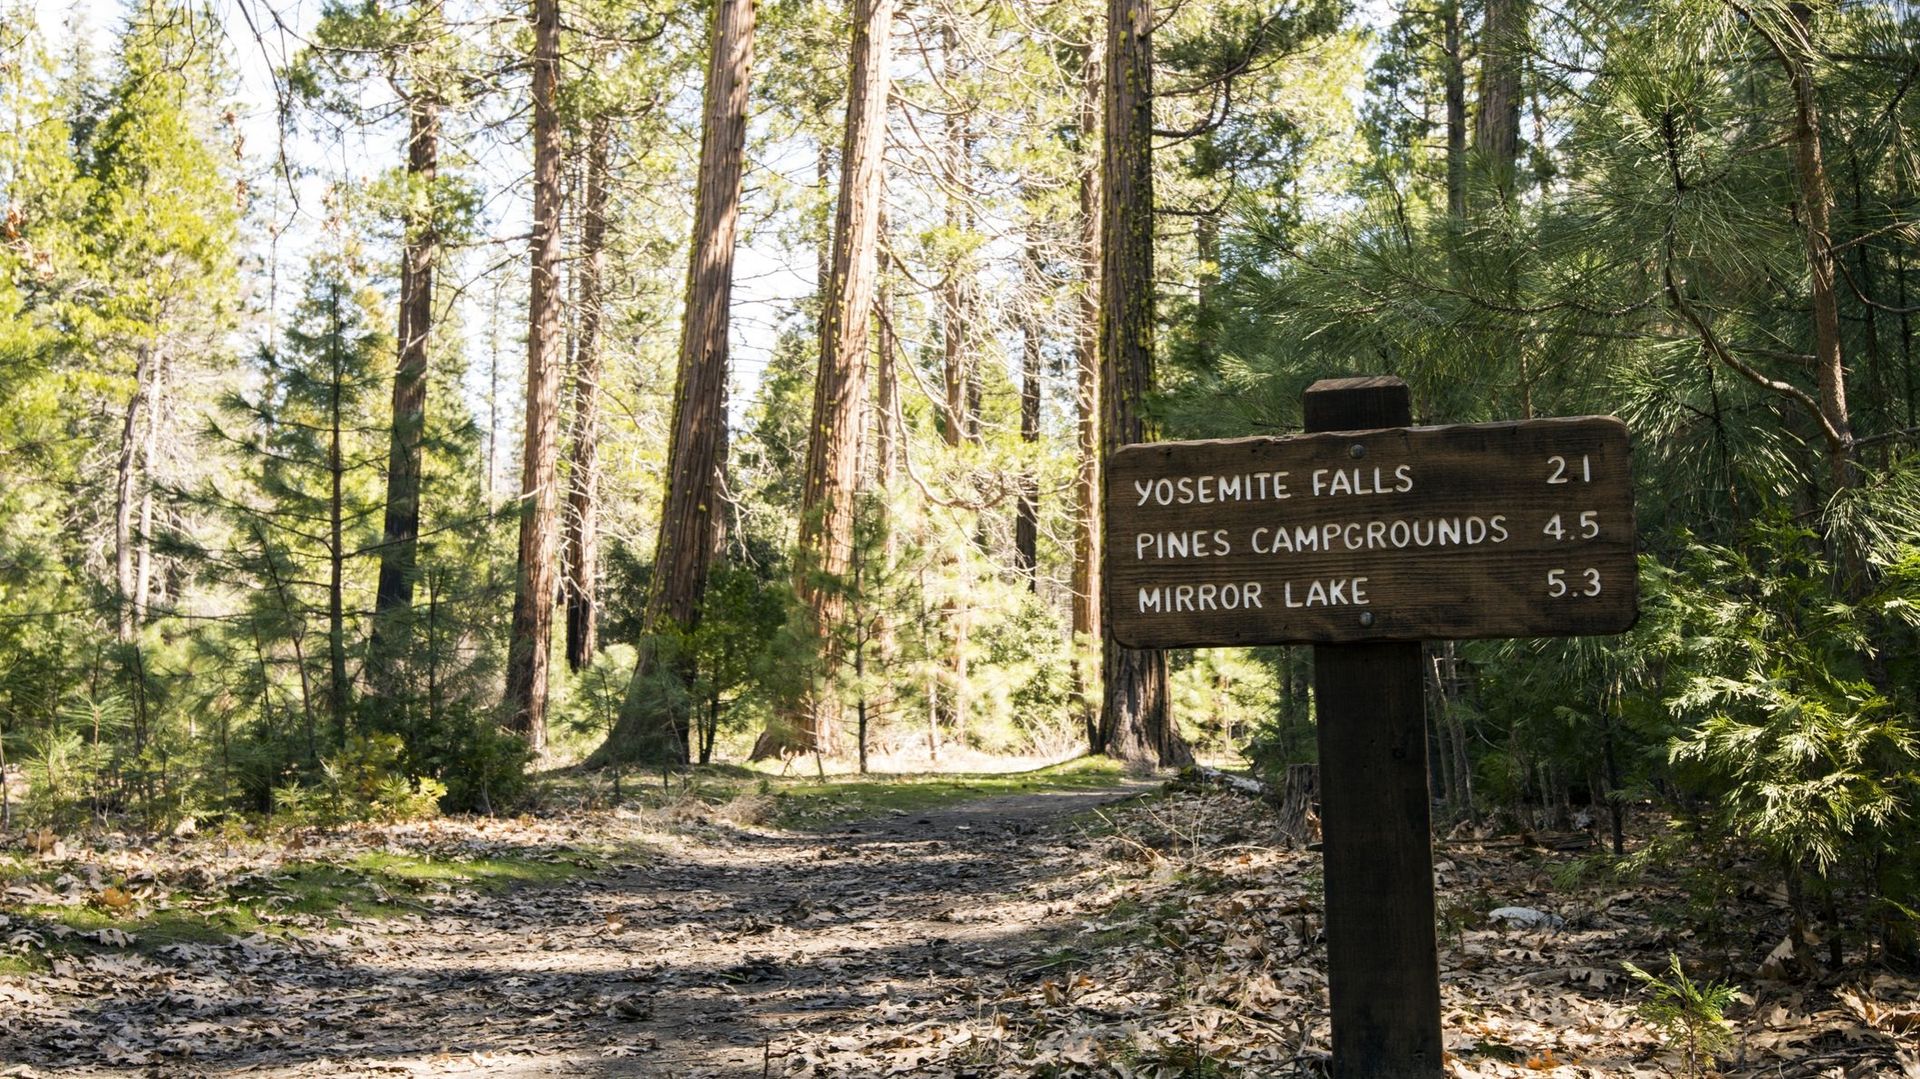 Hiking sign in Yosemite National Park